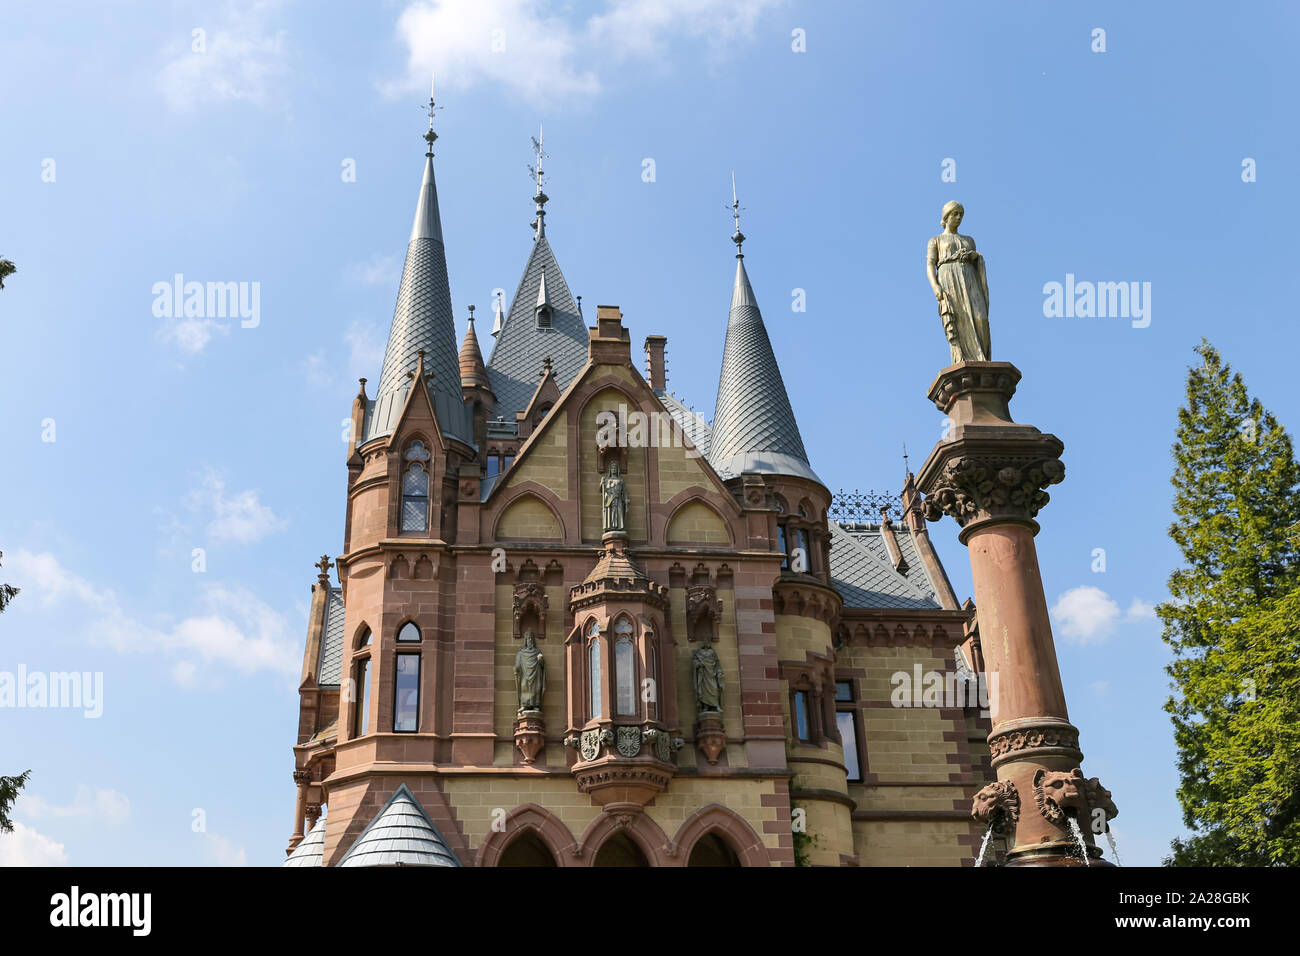 Facade of Schloss Drachenburg in Bonn City, Germany Stock Photo